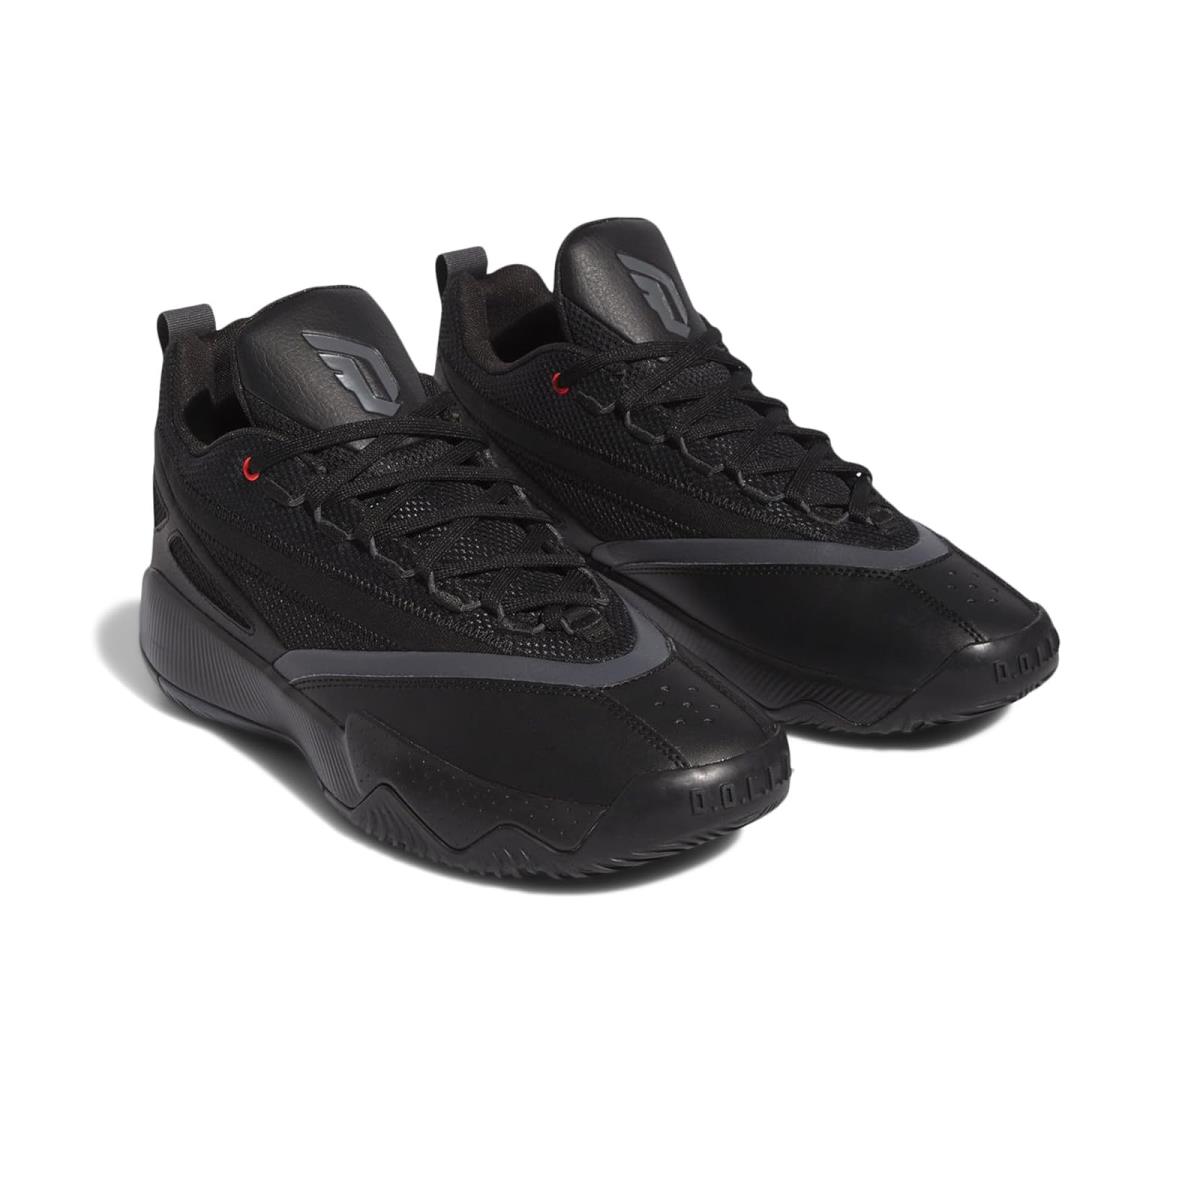 Unisex Sneakers Athletic Shoes Adidas Dame Certified 2 Black/Grey/Black